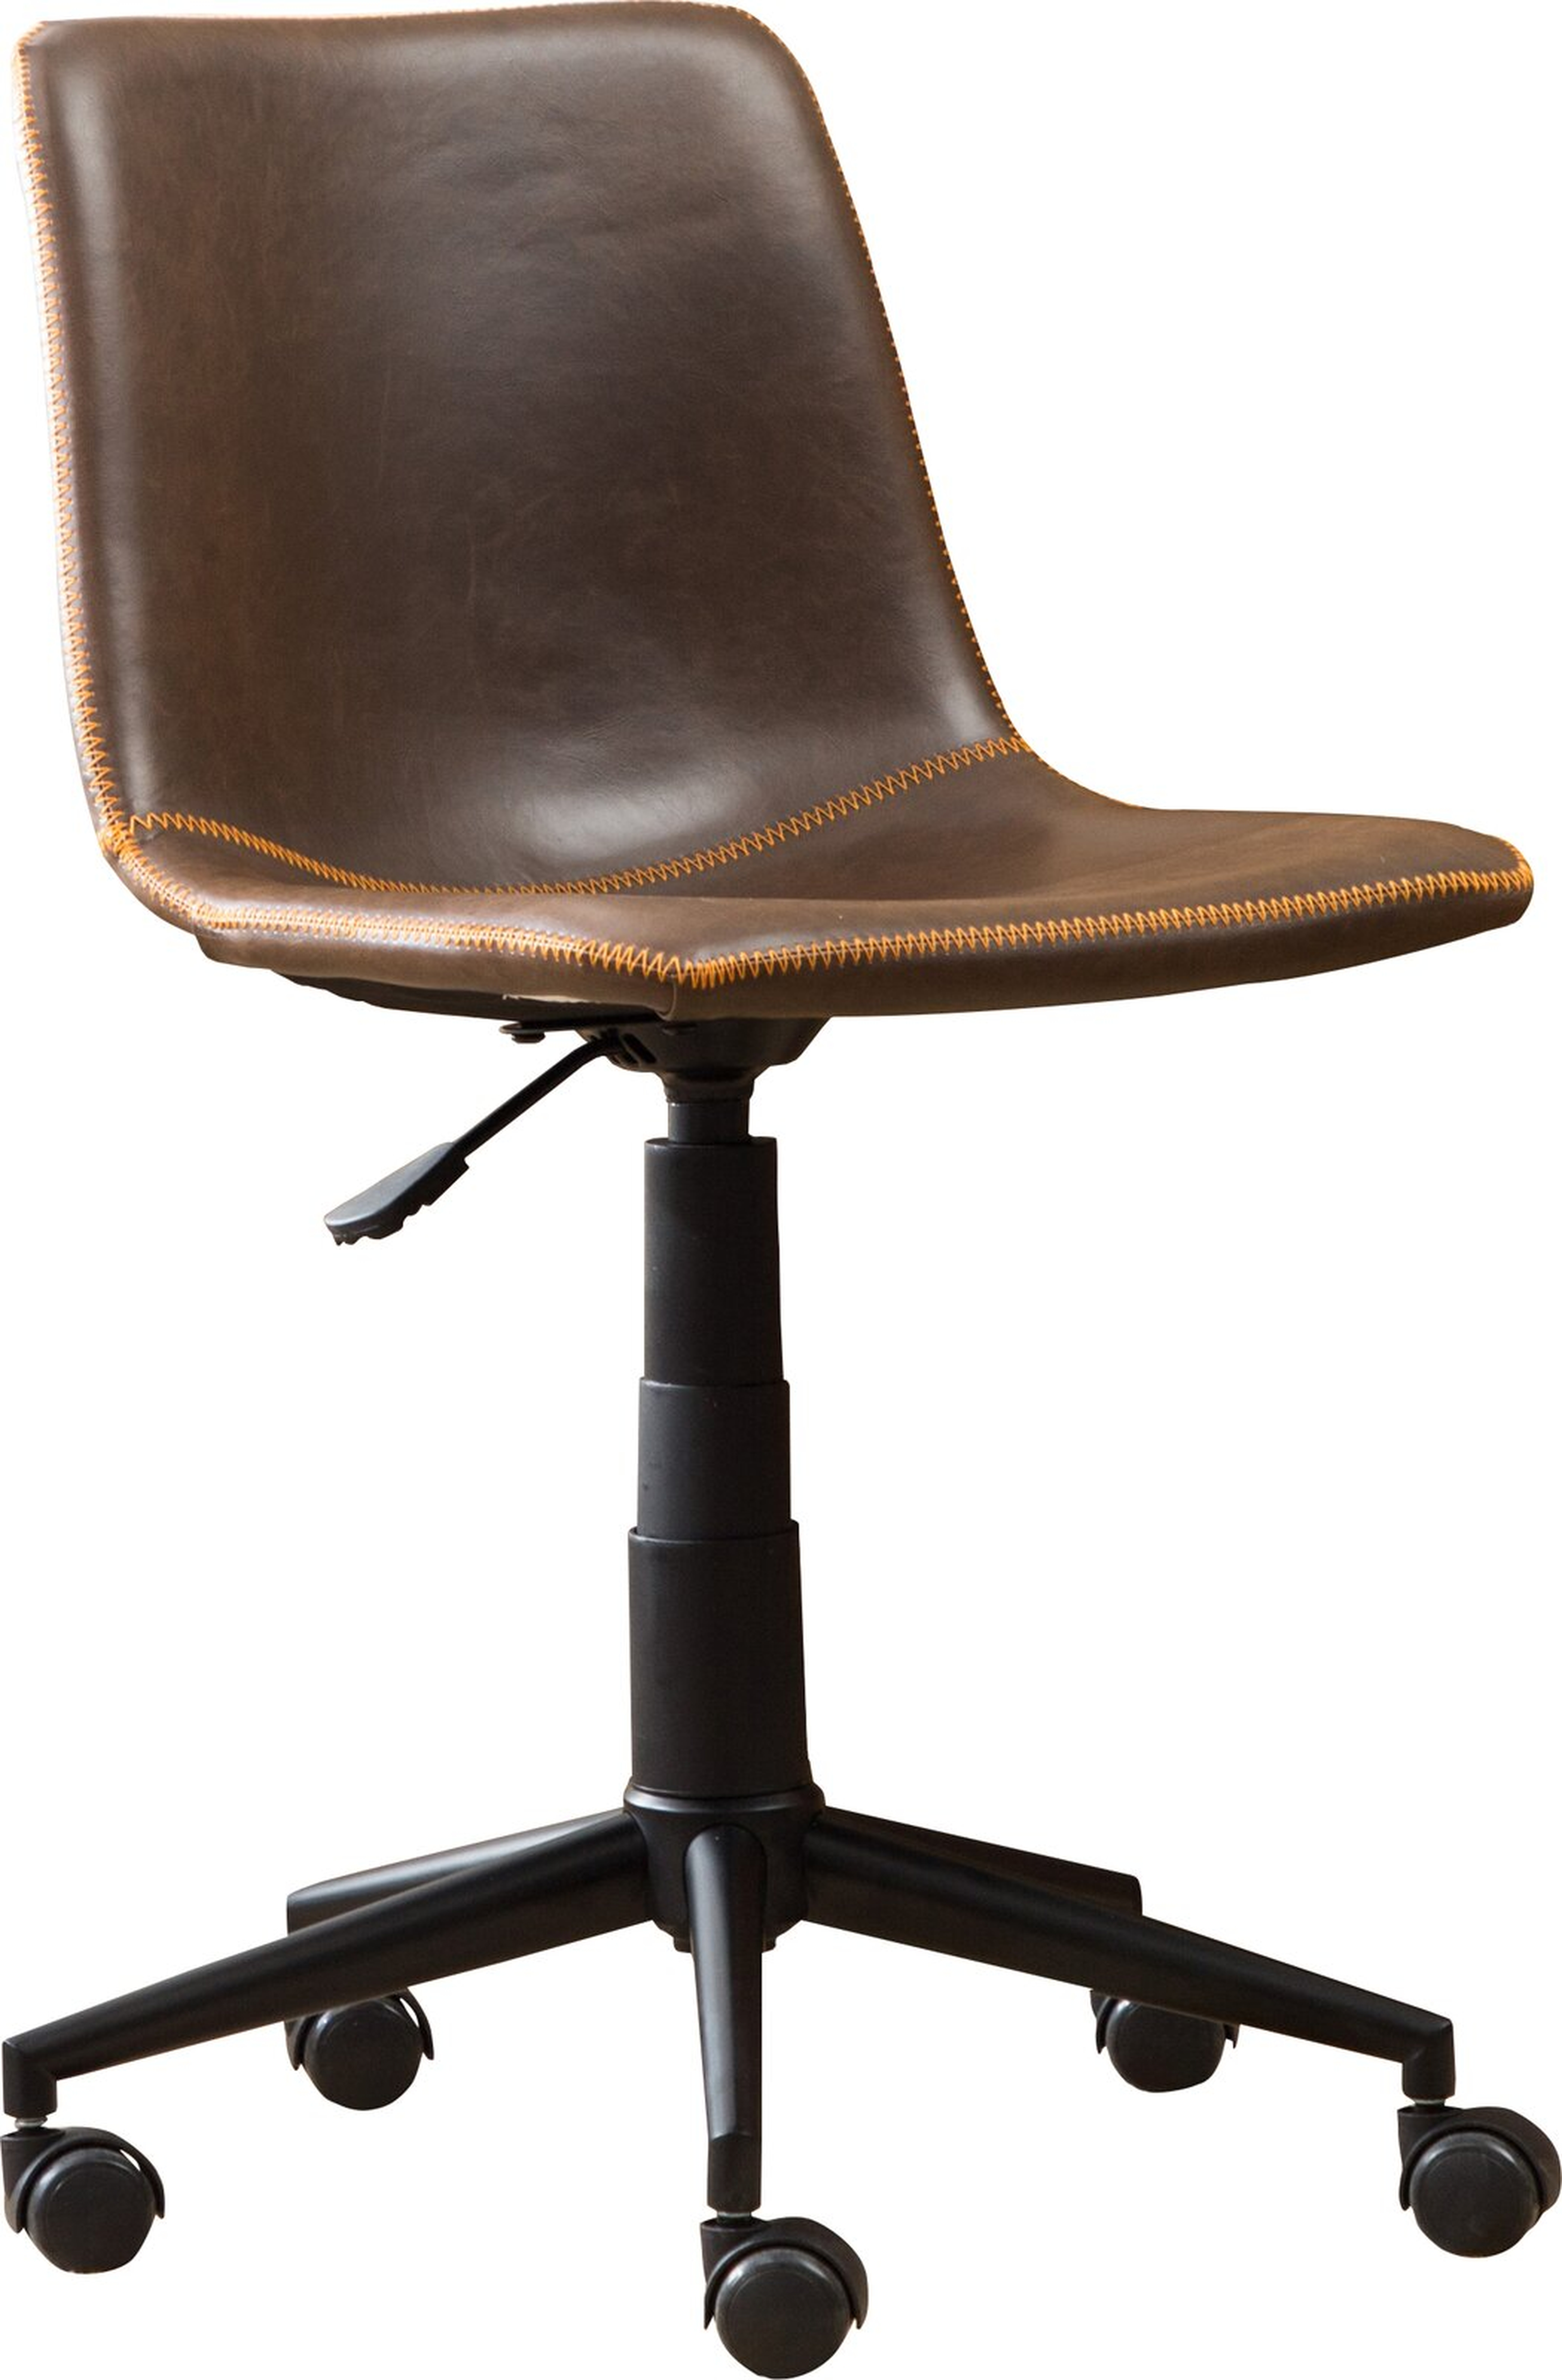 Alina Task Chair, Antique Brown - Wayfair